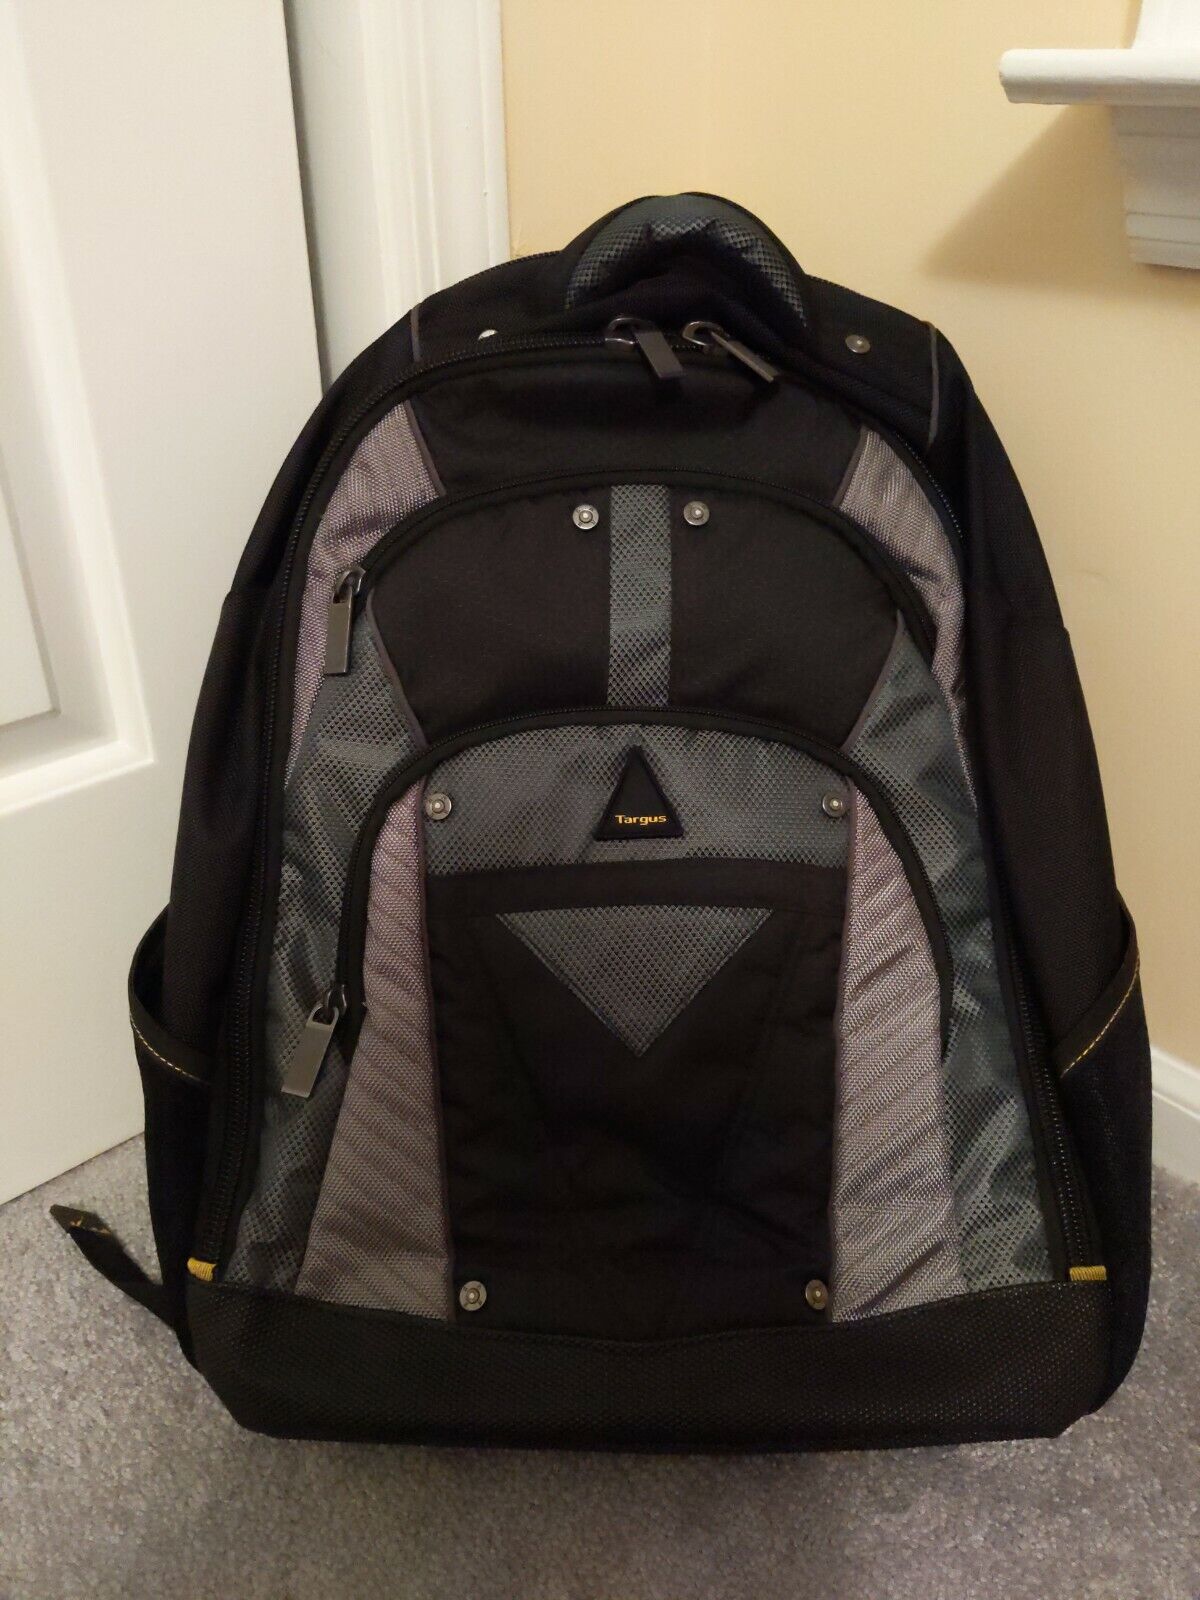 Targus Black & Gray Laptop Backpack Travel Commuter Bag Unused 🔥 NICE